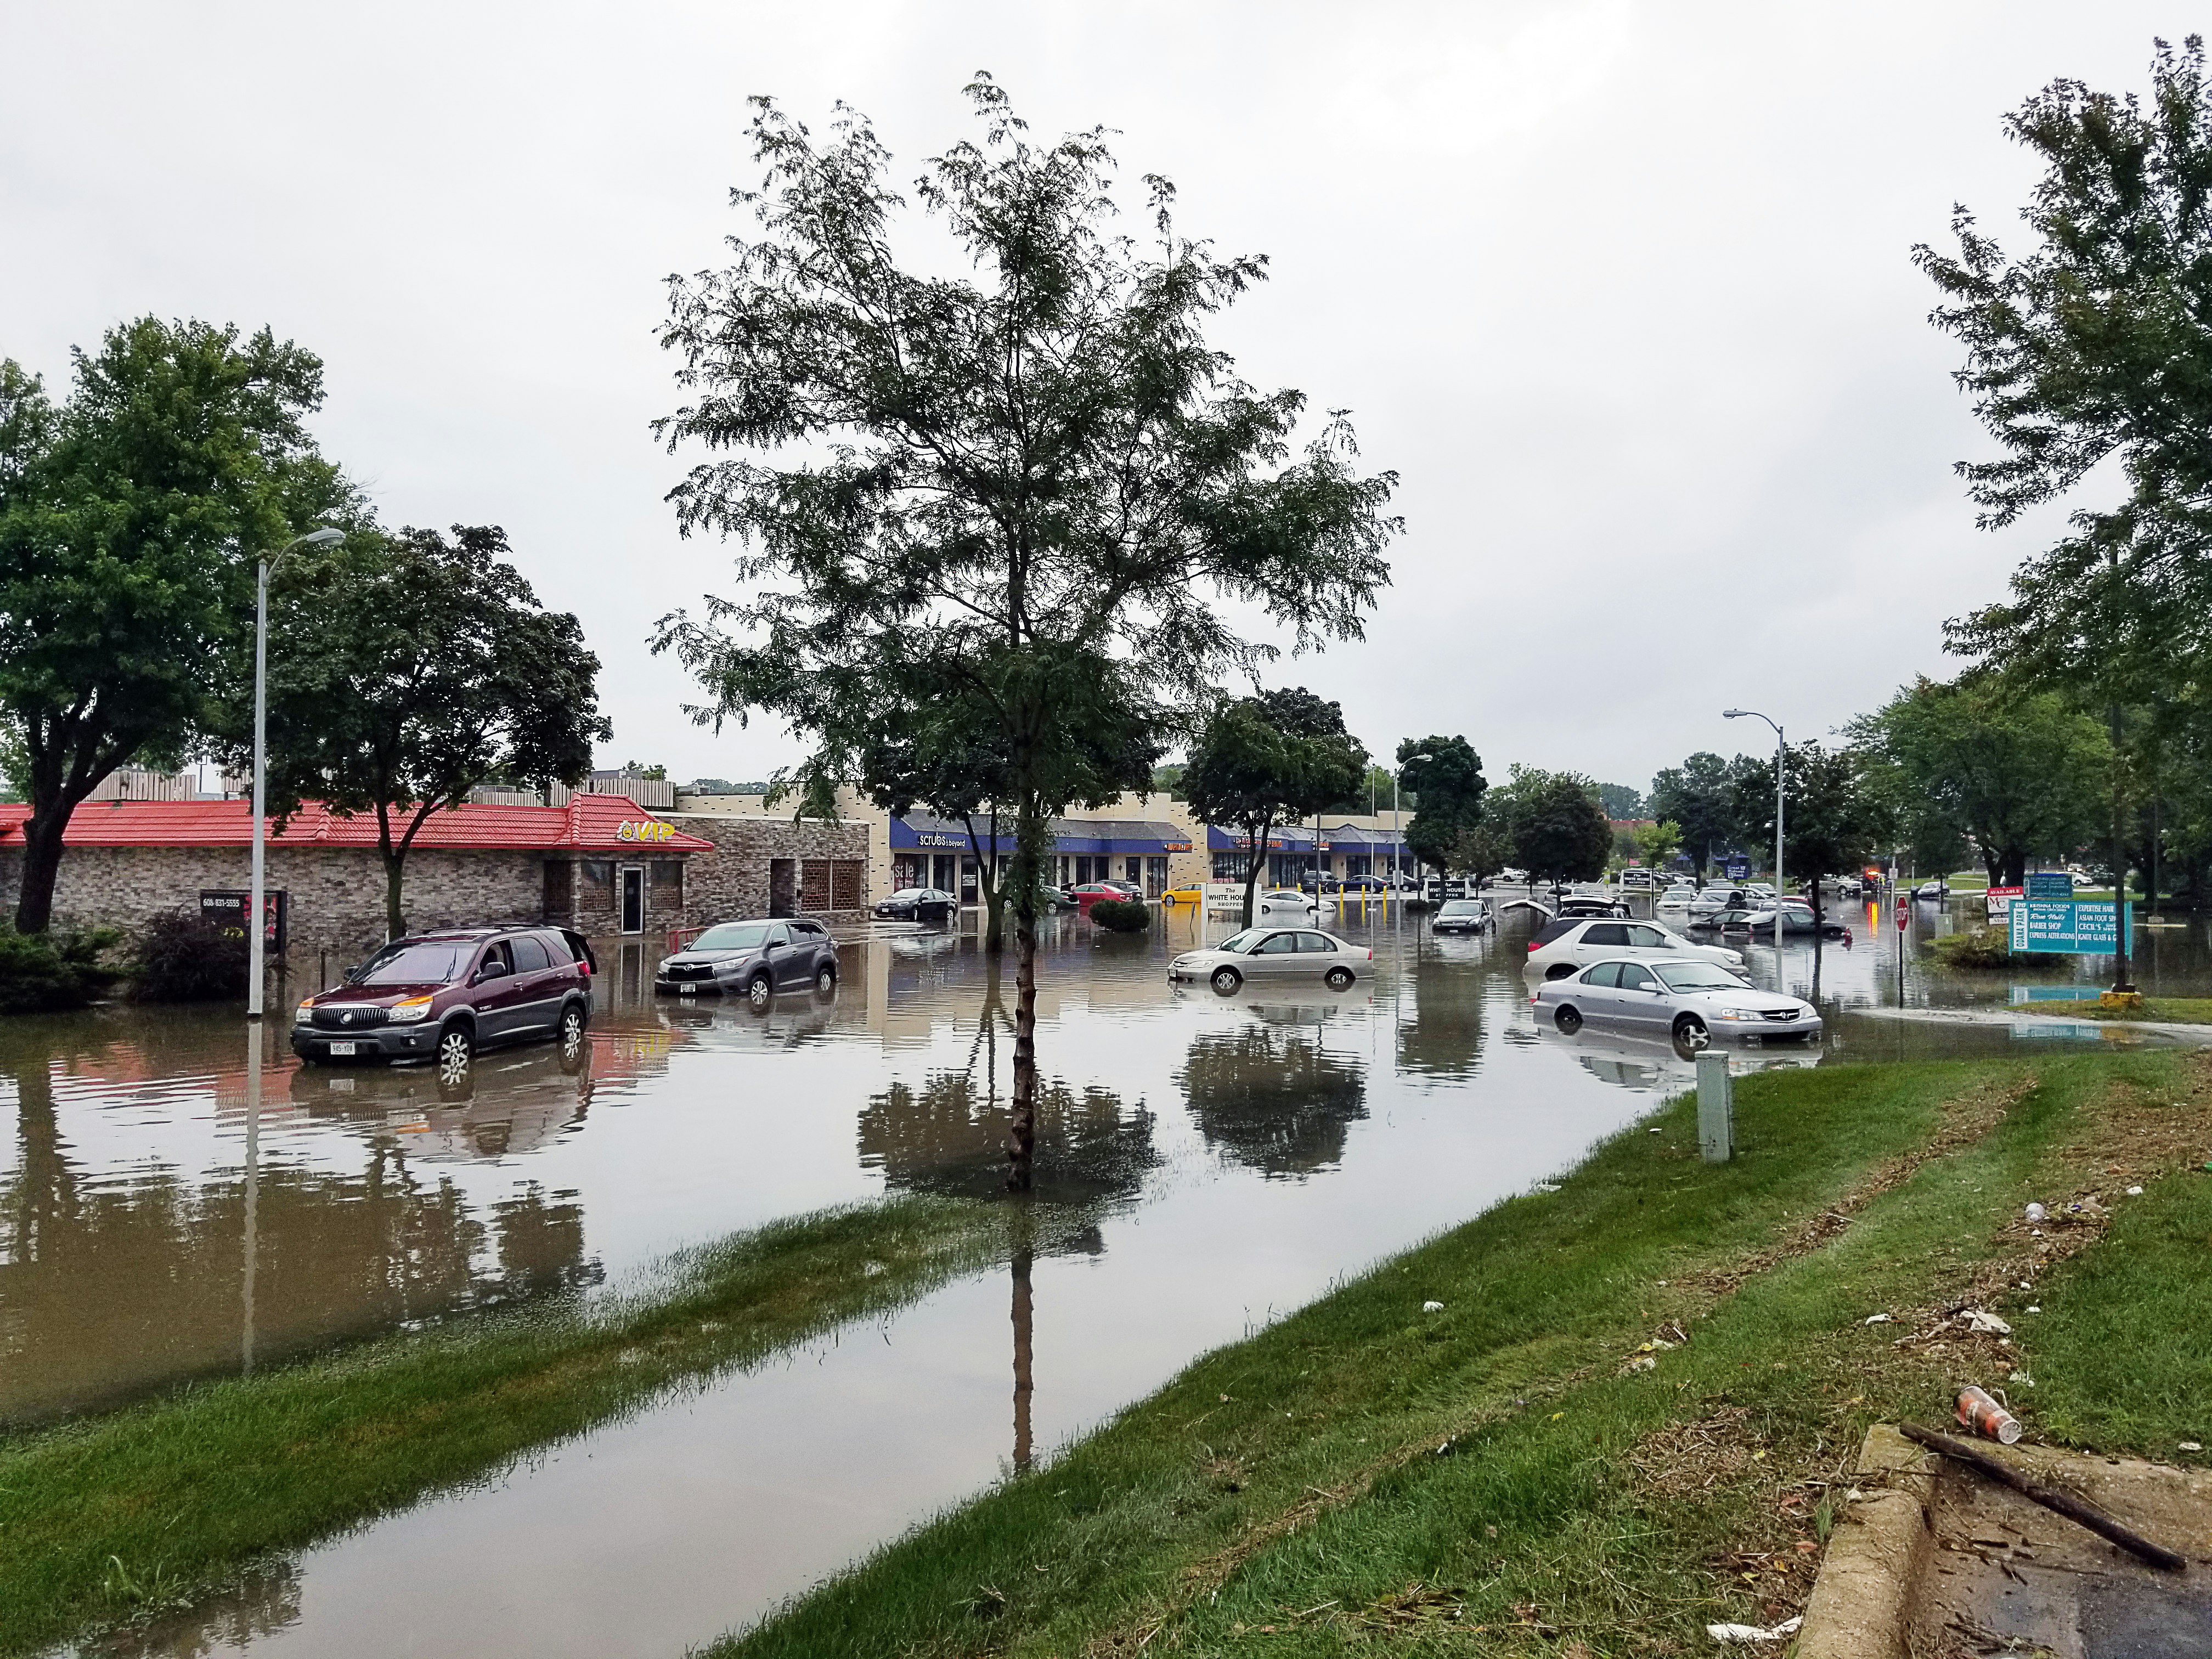 cars on flooded street